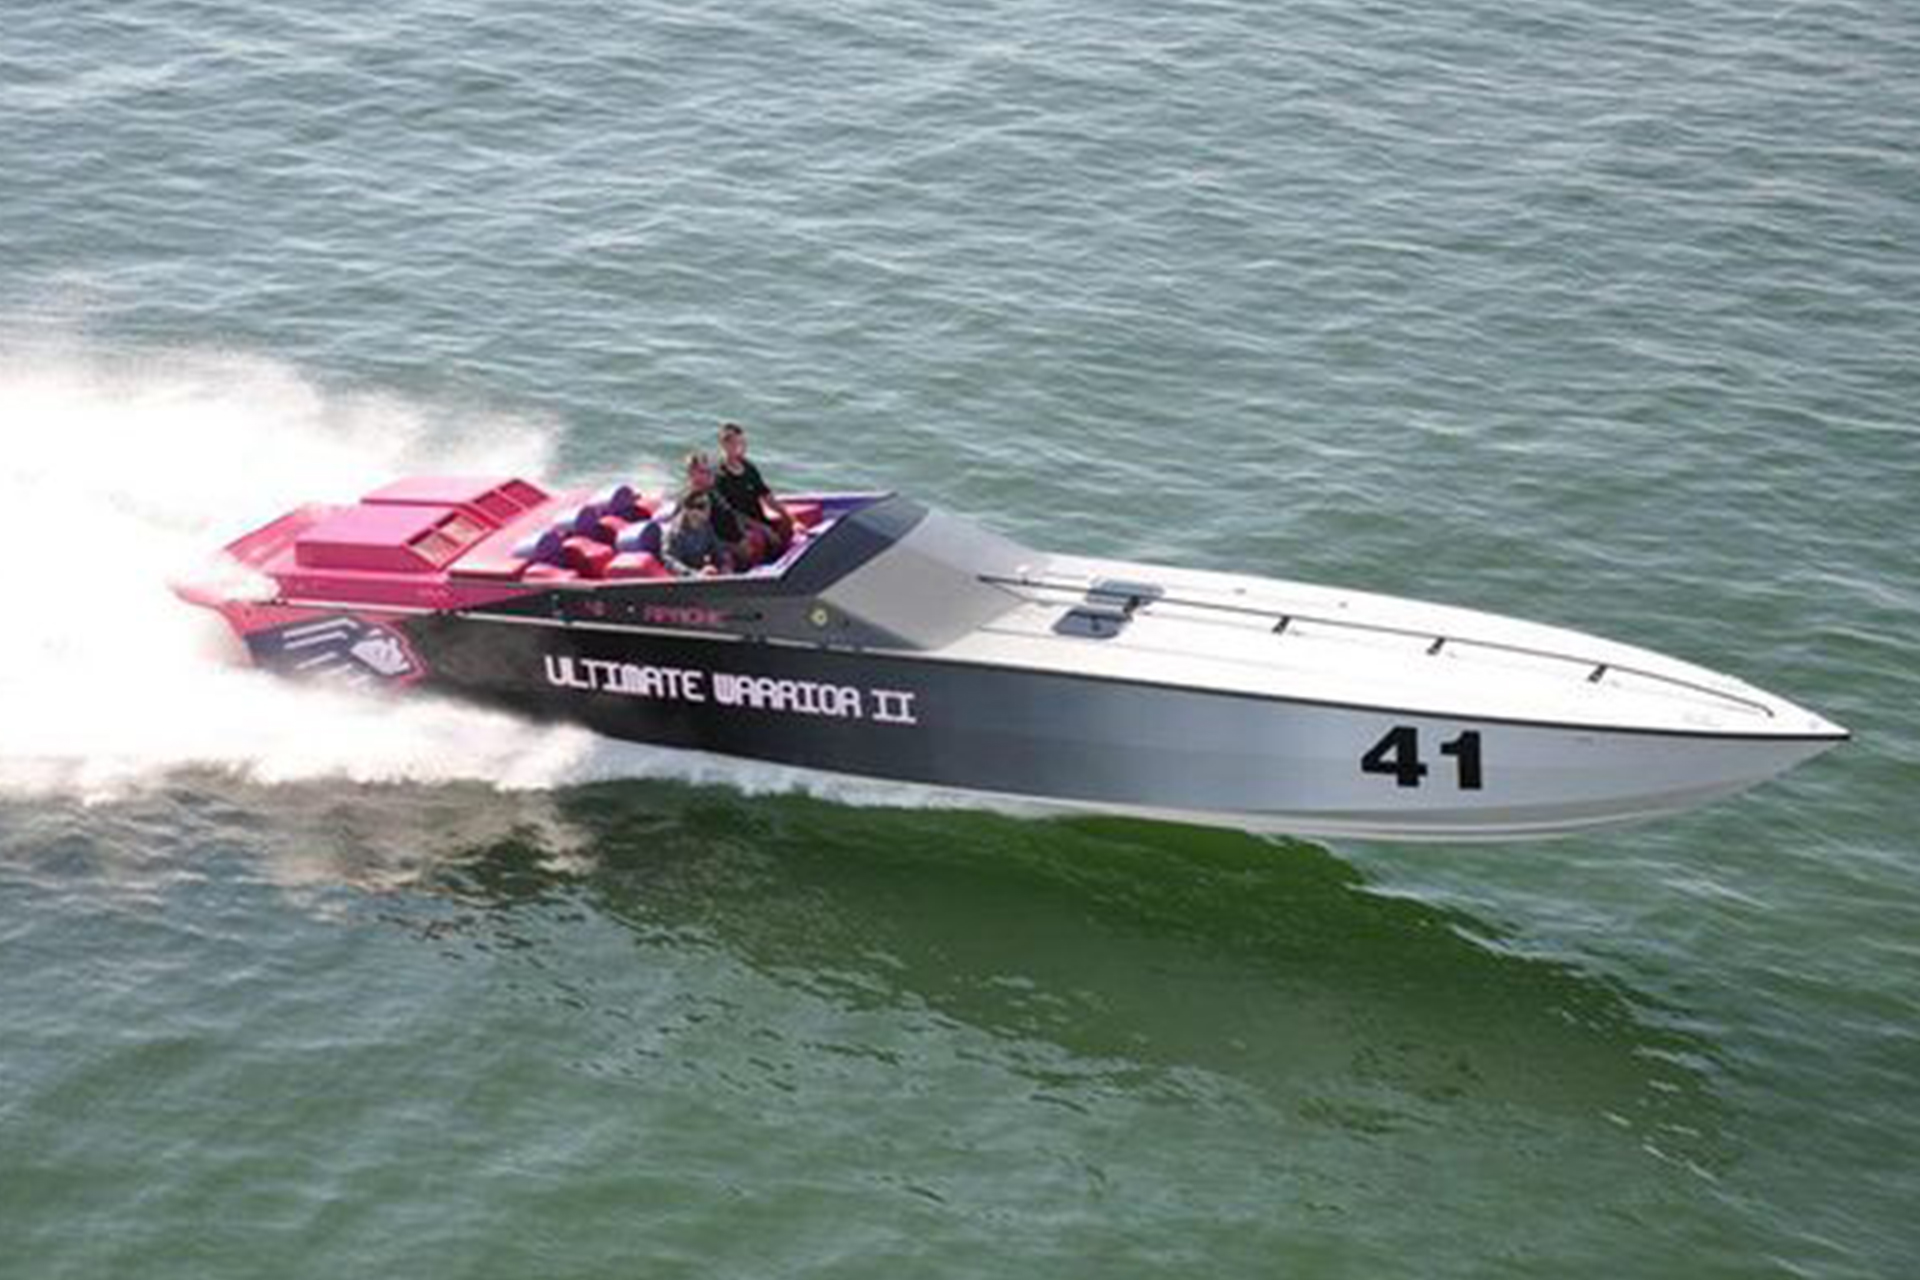 Custom Ultimate Warrior II boat speeding on water.